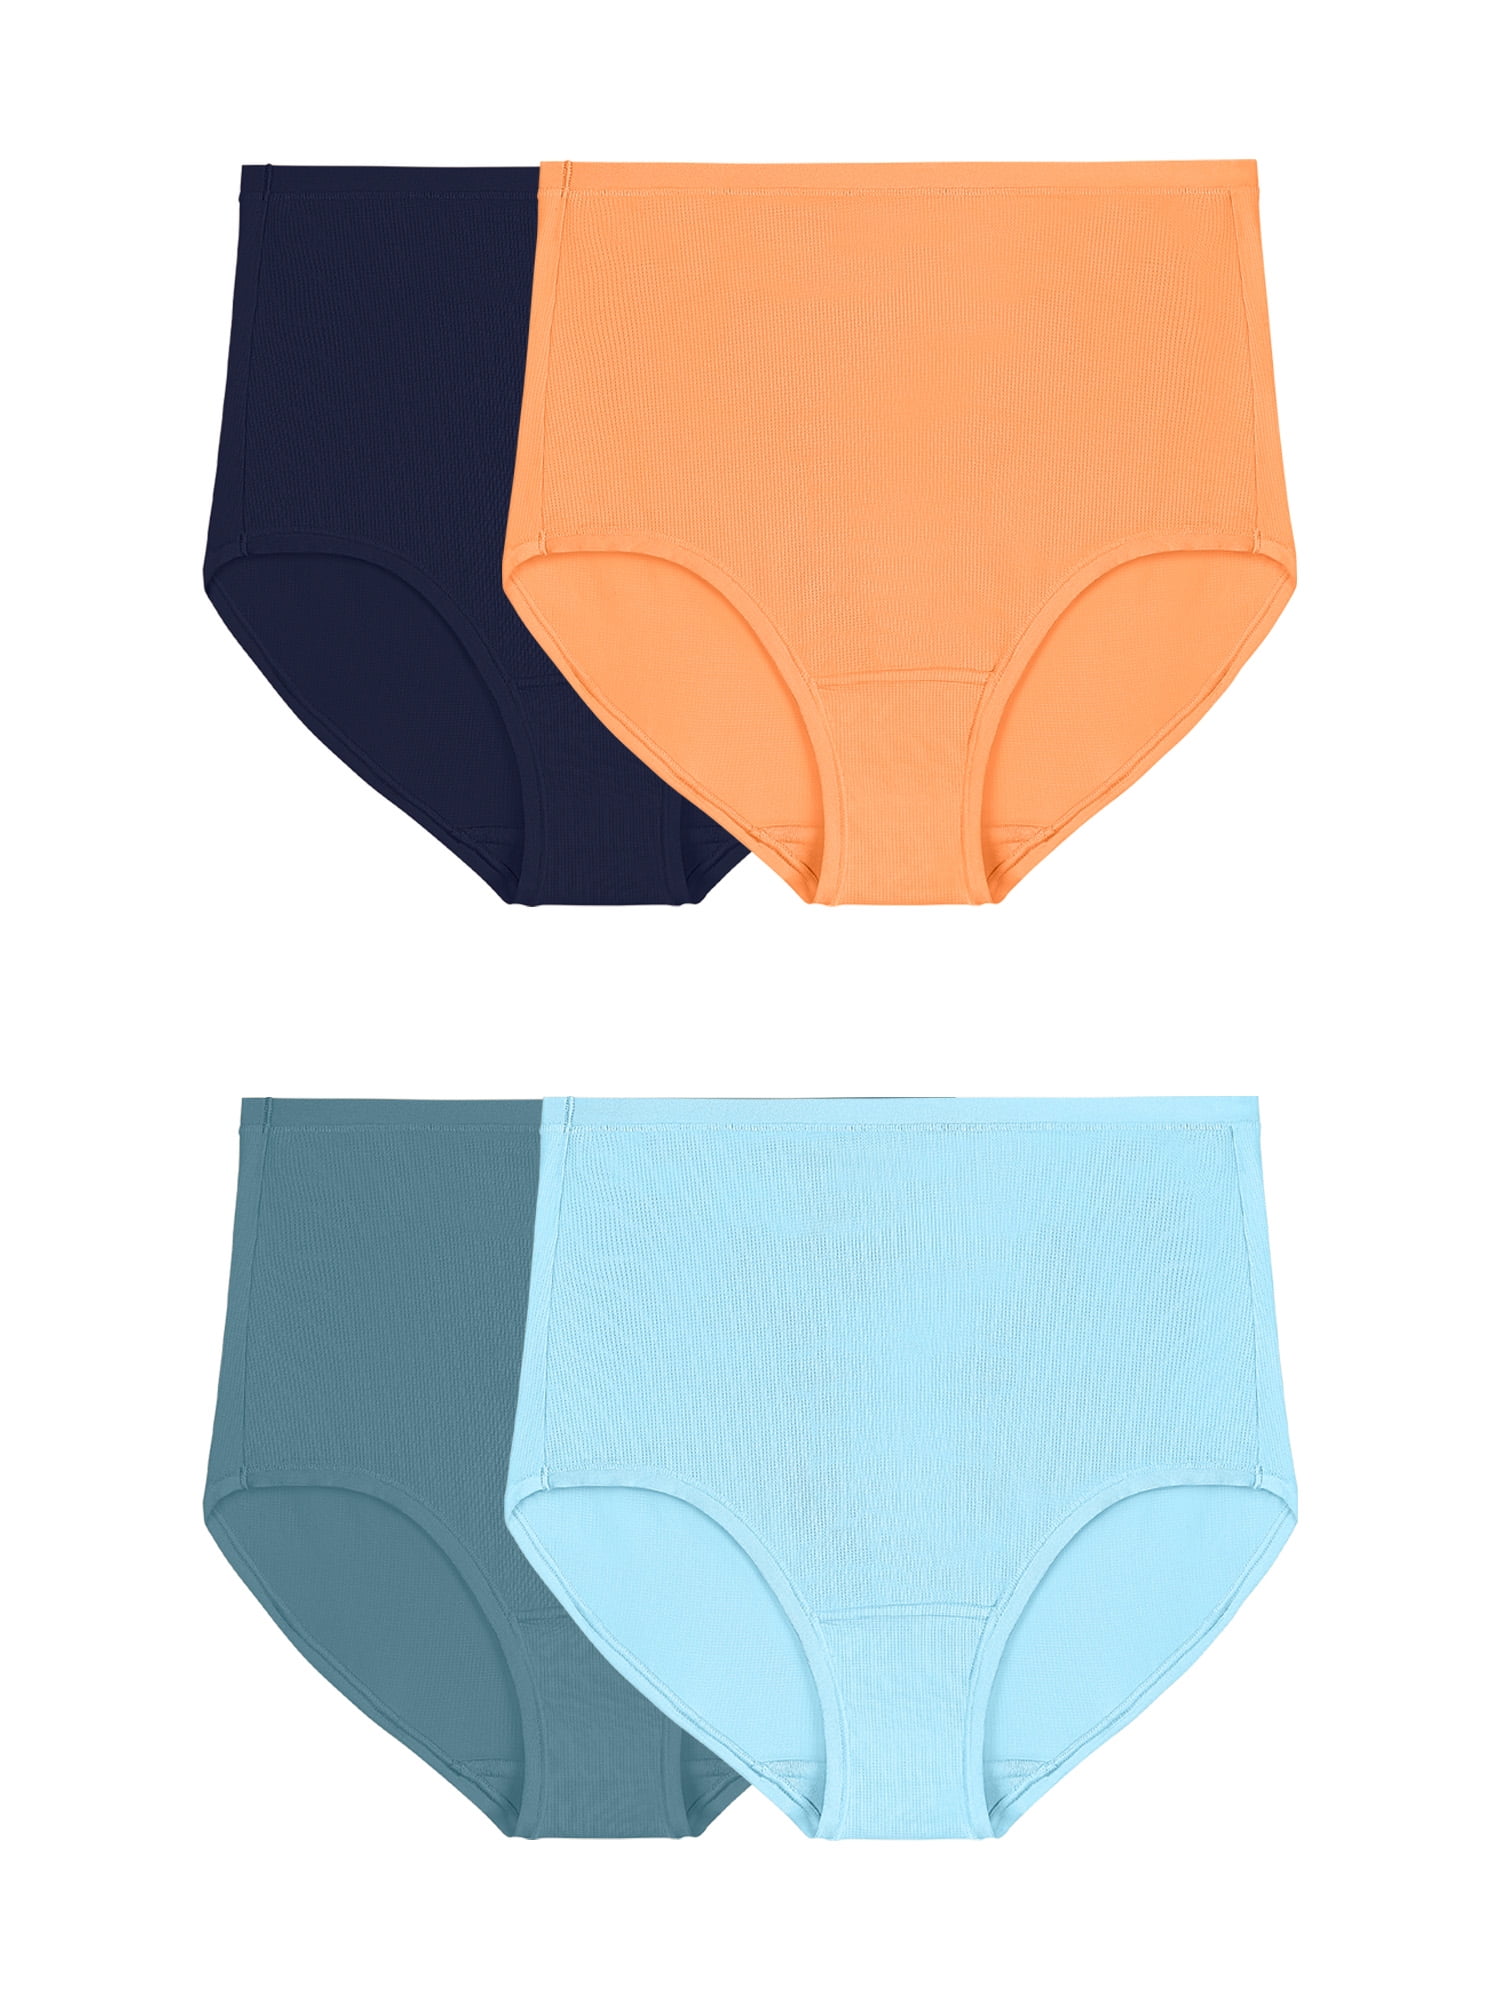 Fruit of the Loom Girls' Cotton Brief Underwear, 10 Pack Panties, Sizes 4-16  